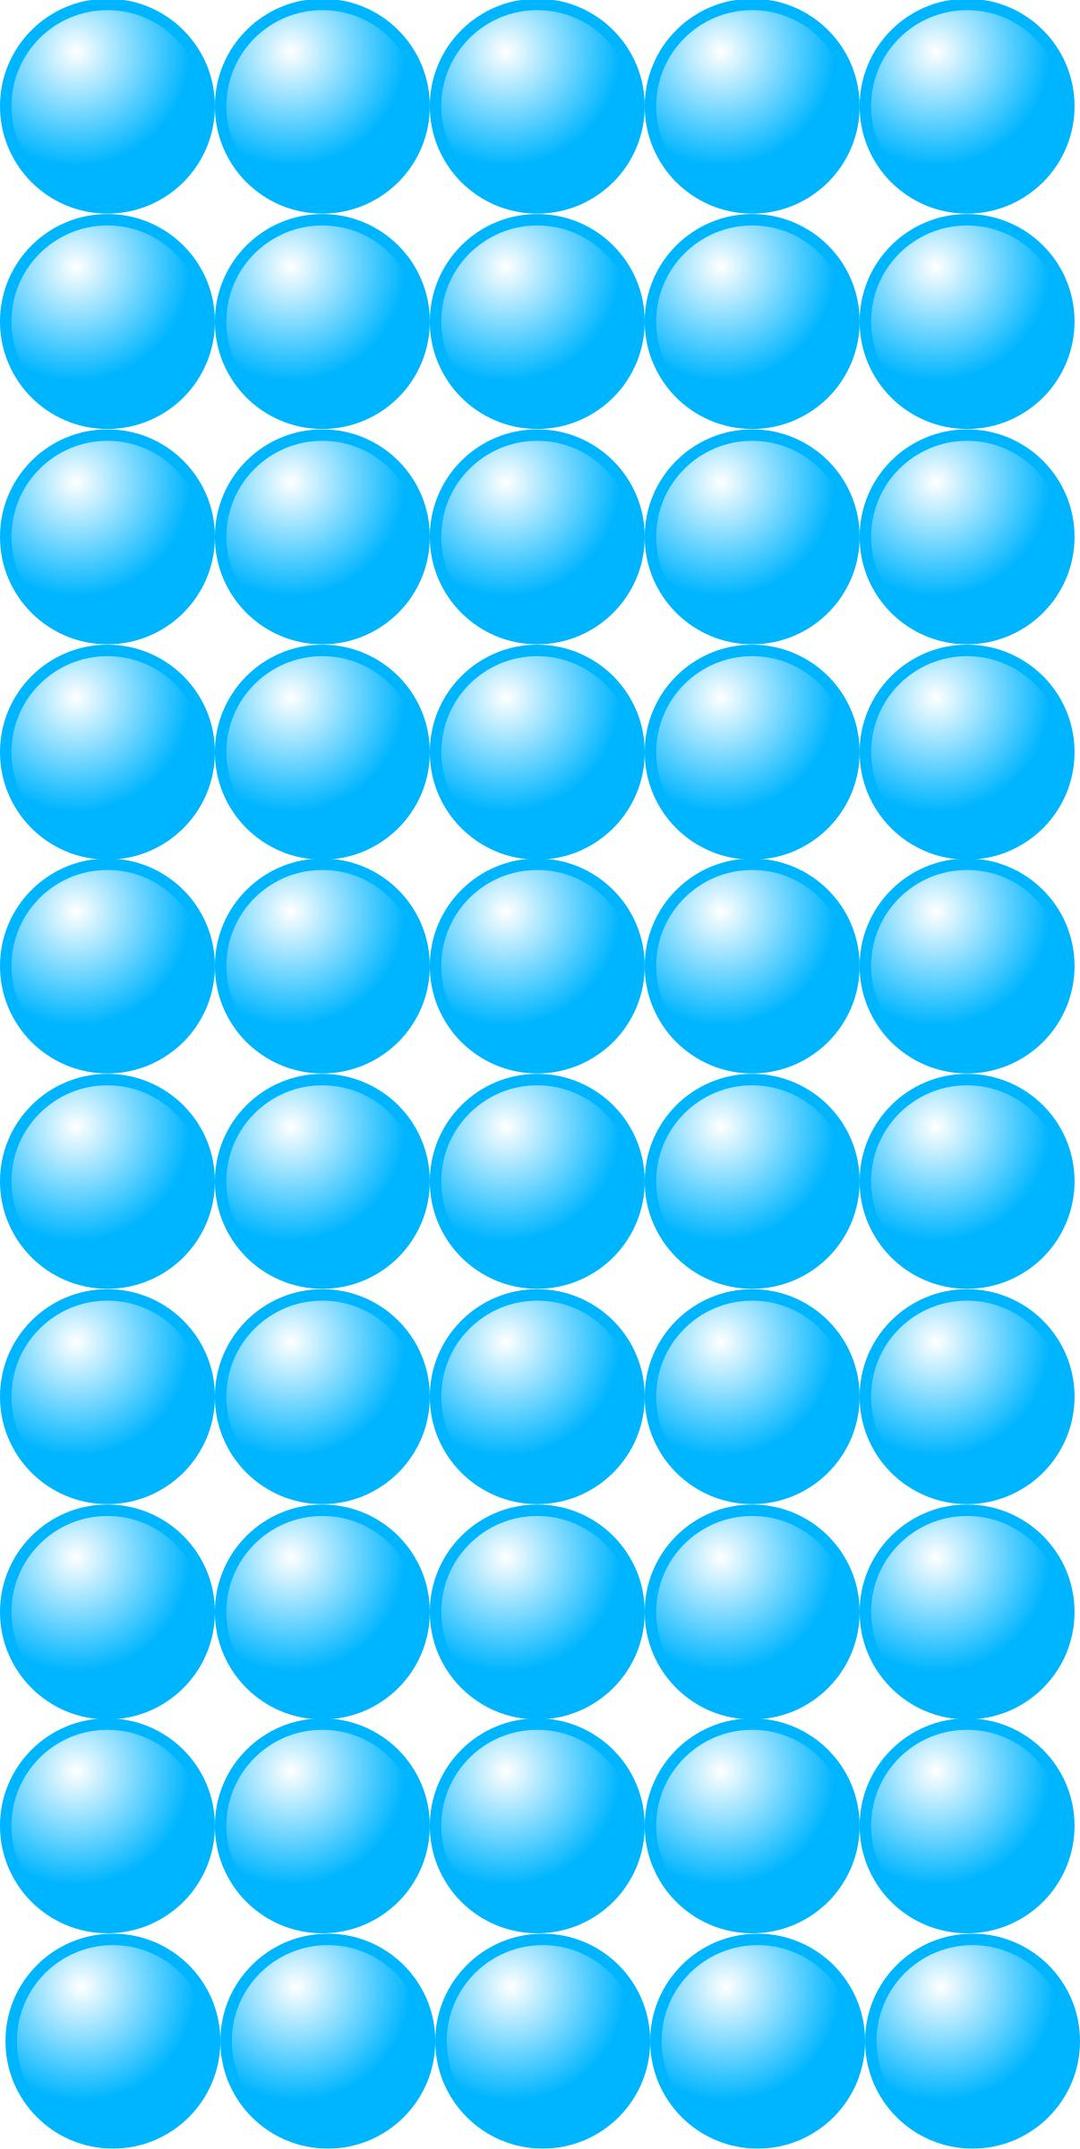 Beads quantitative picture for multiplication 10x5 png transparent